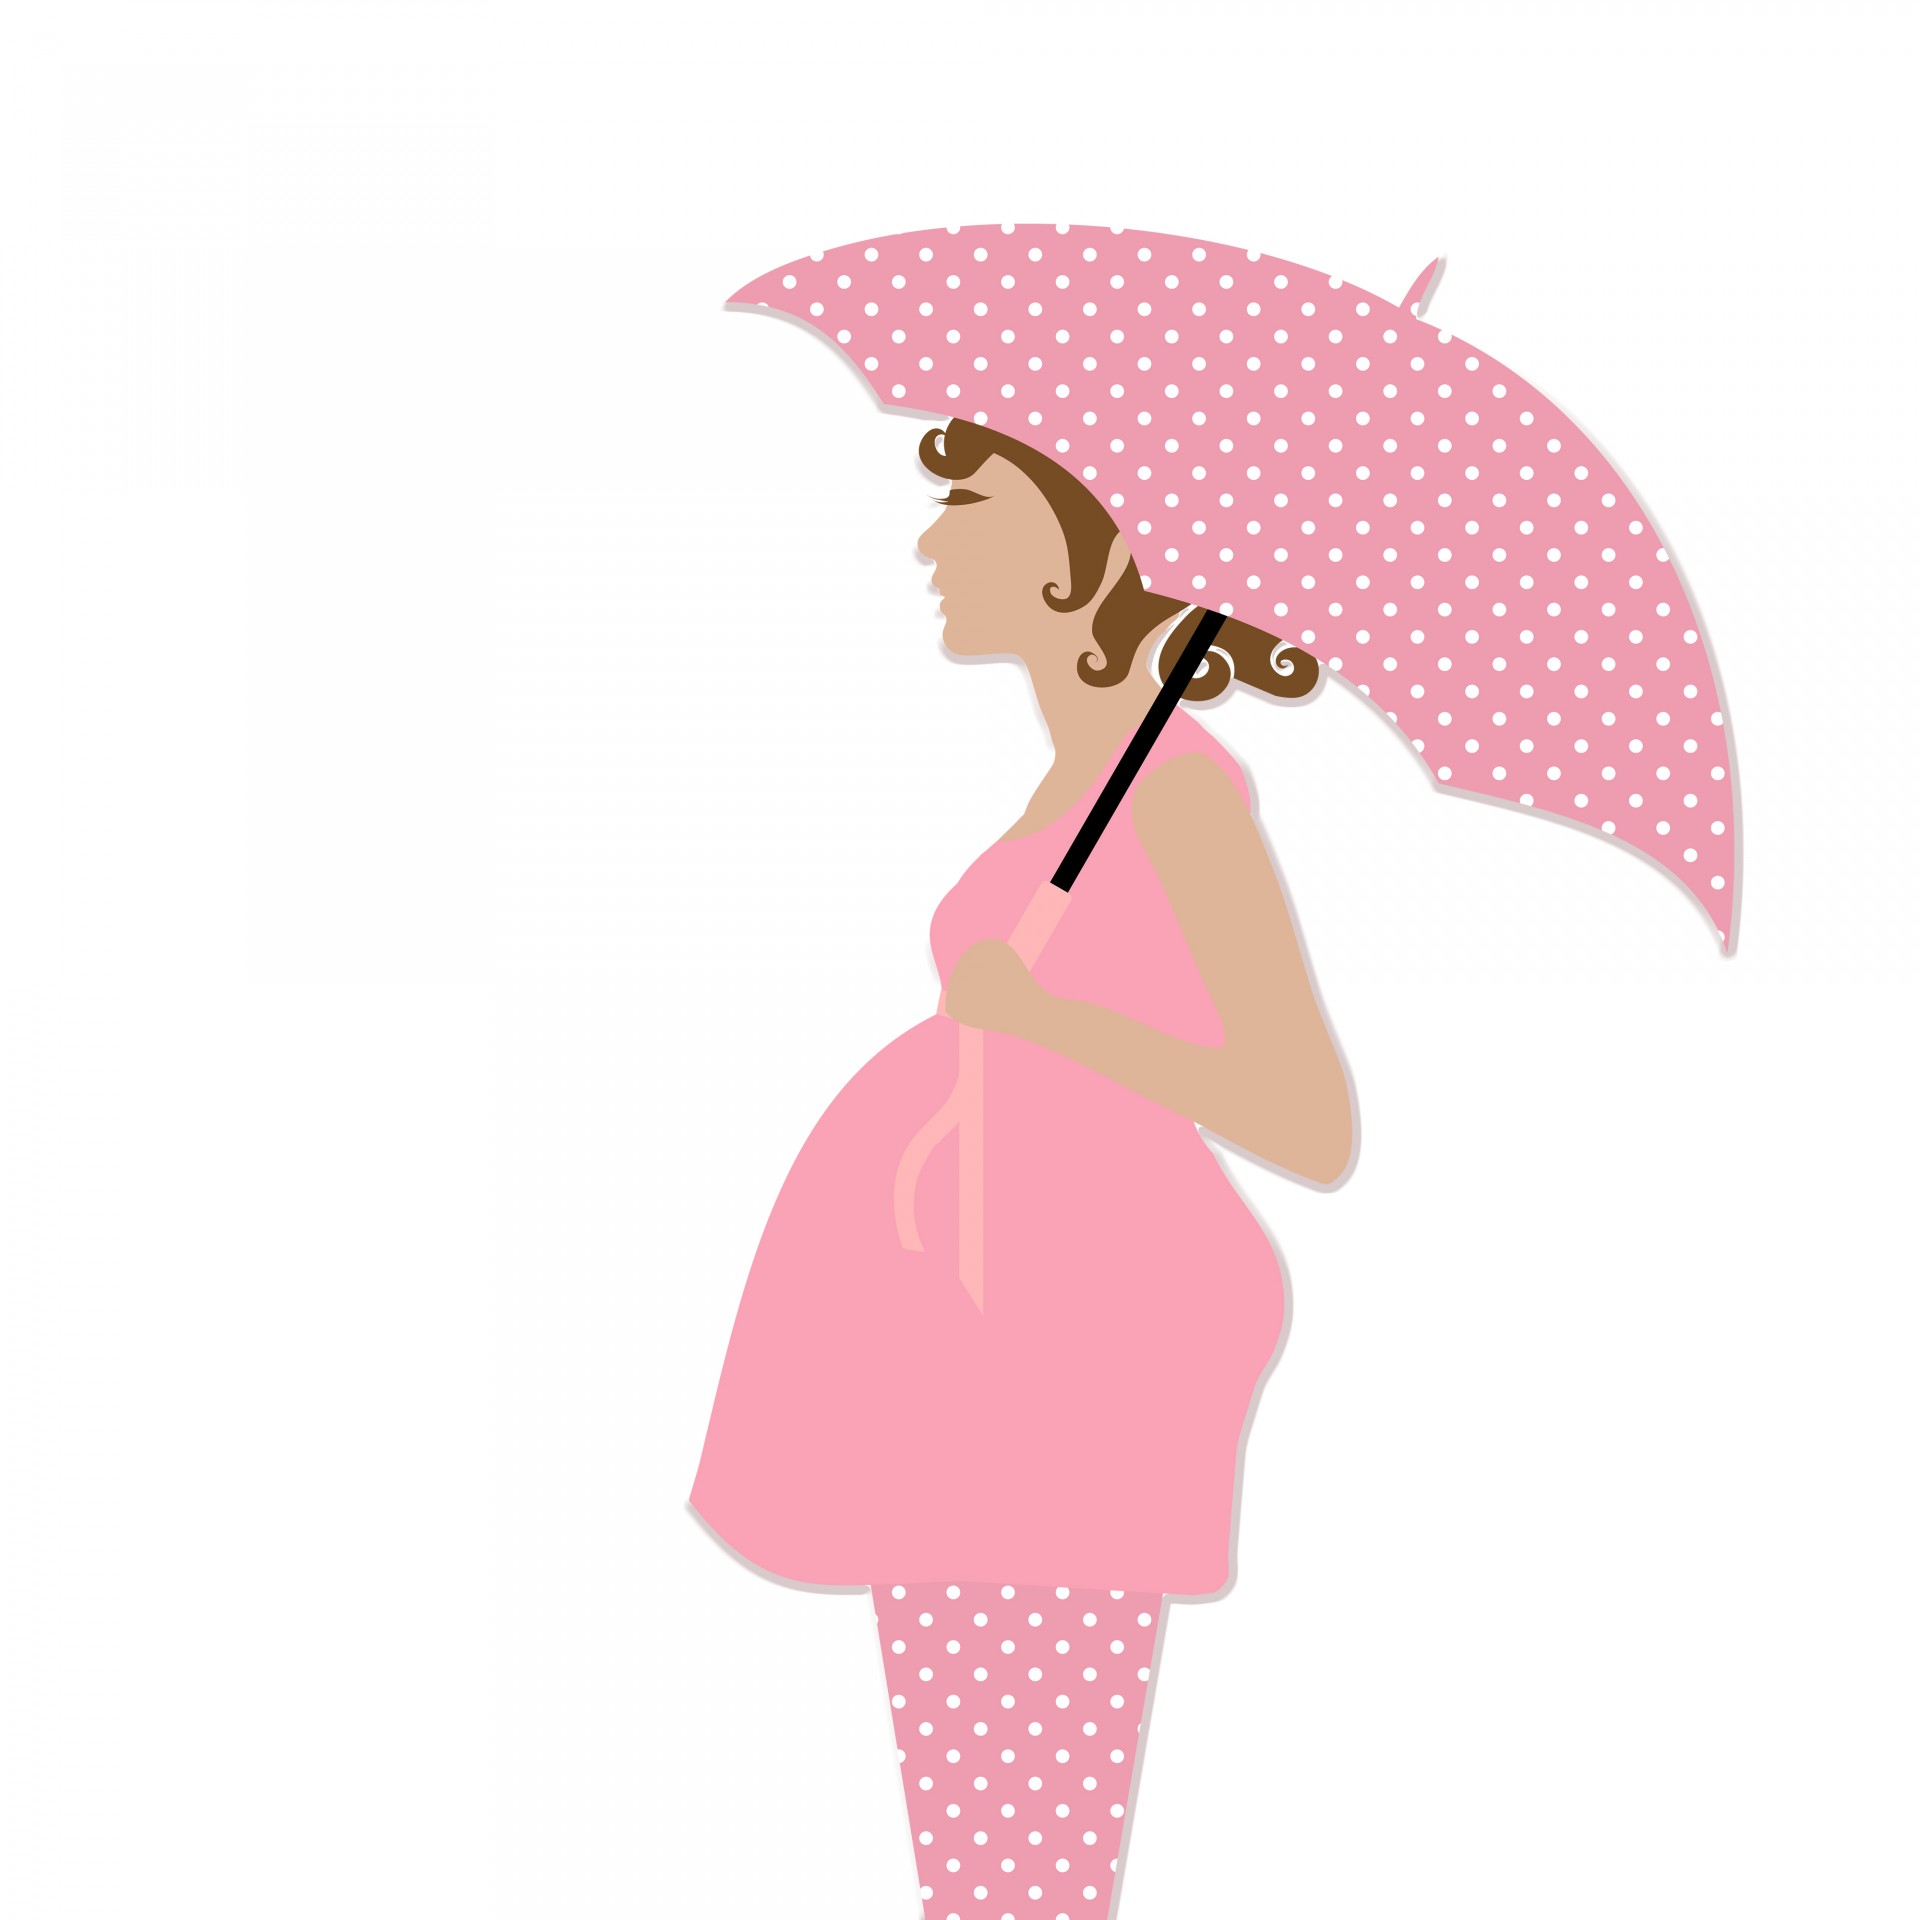 Pregnant Woman With Umbrella